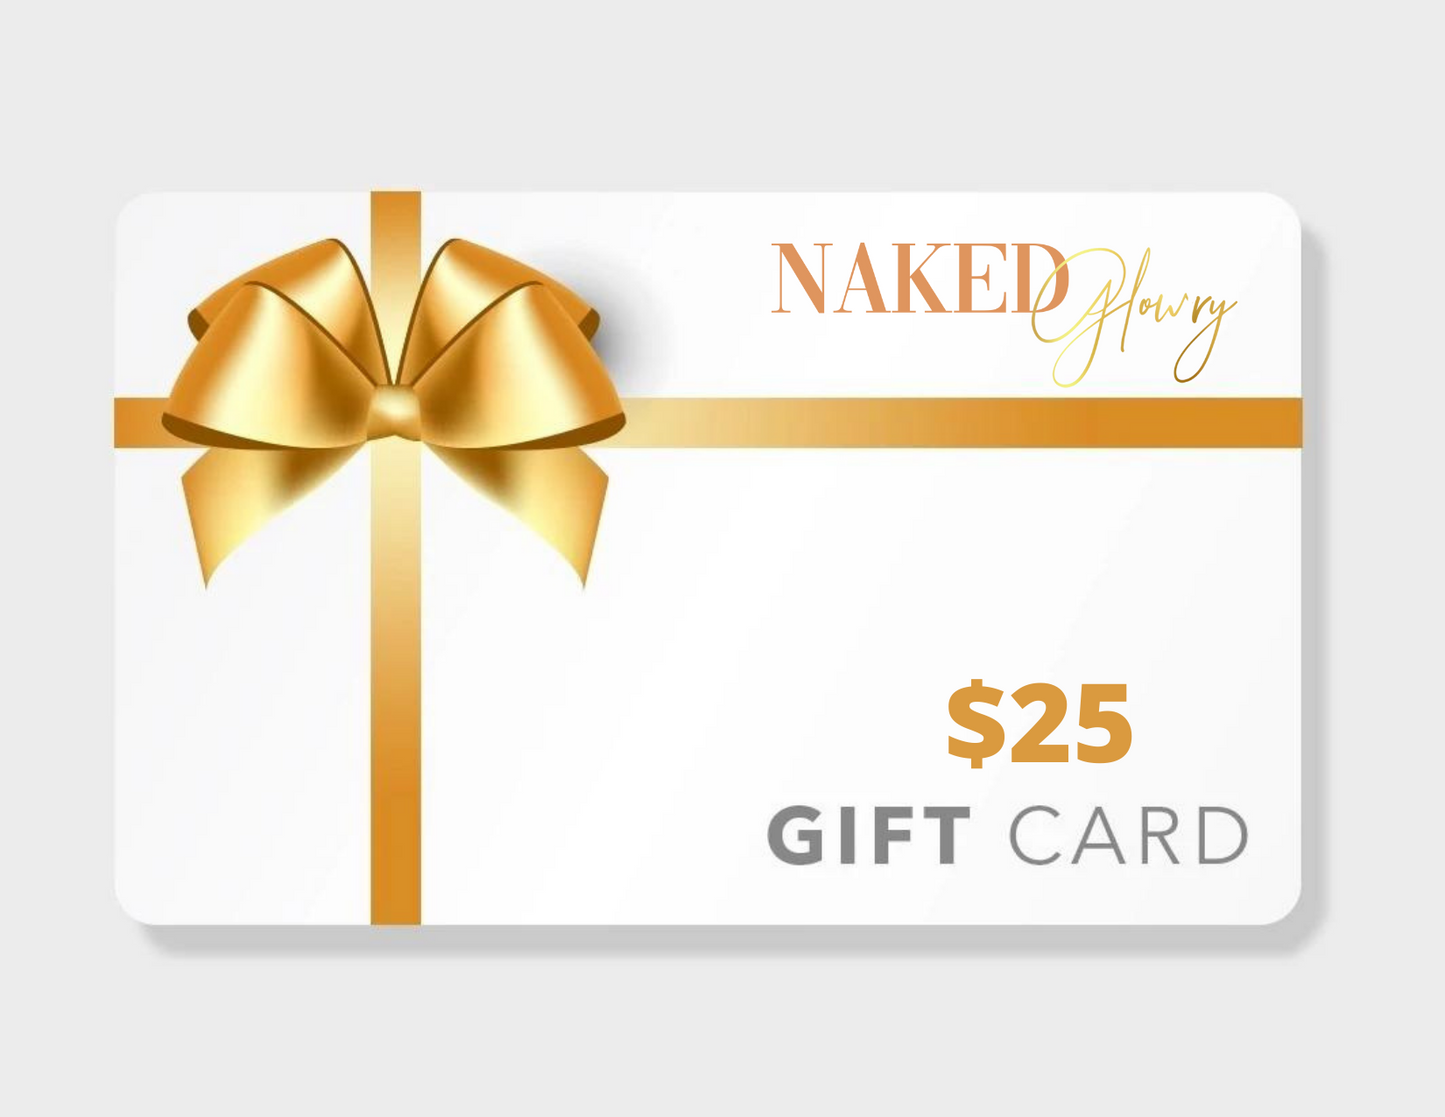 Naked Glowry Gift Card